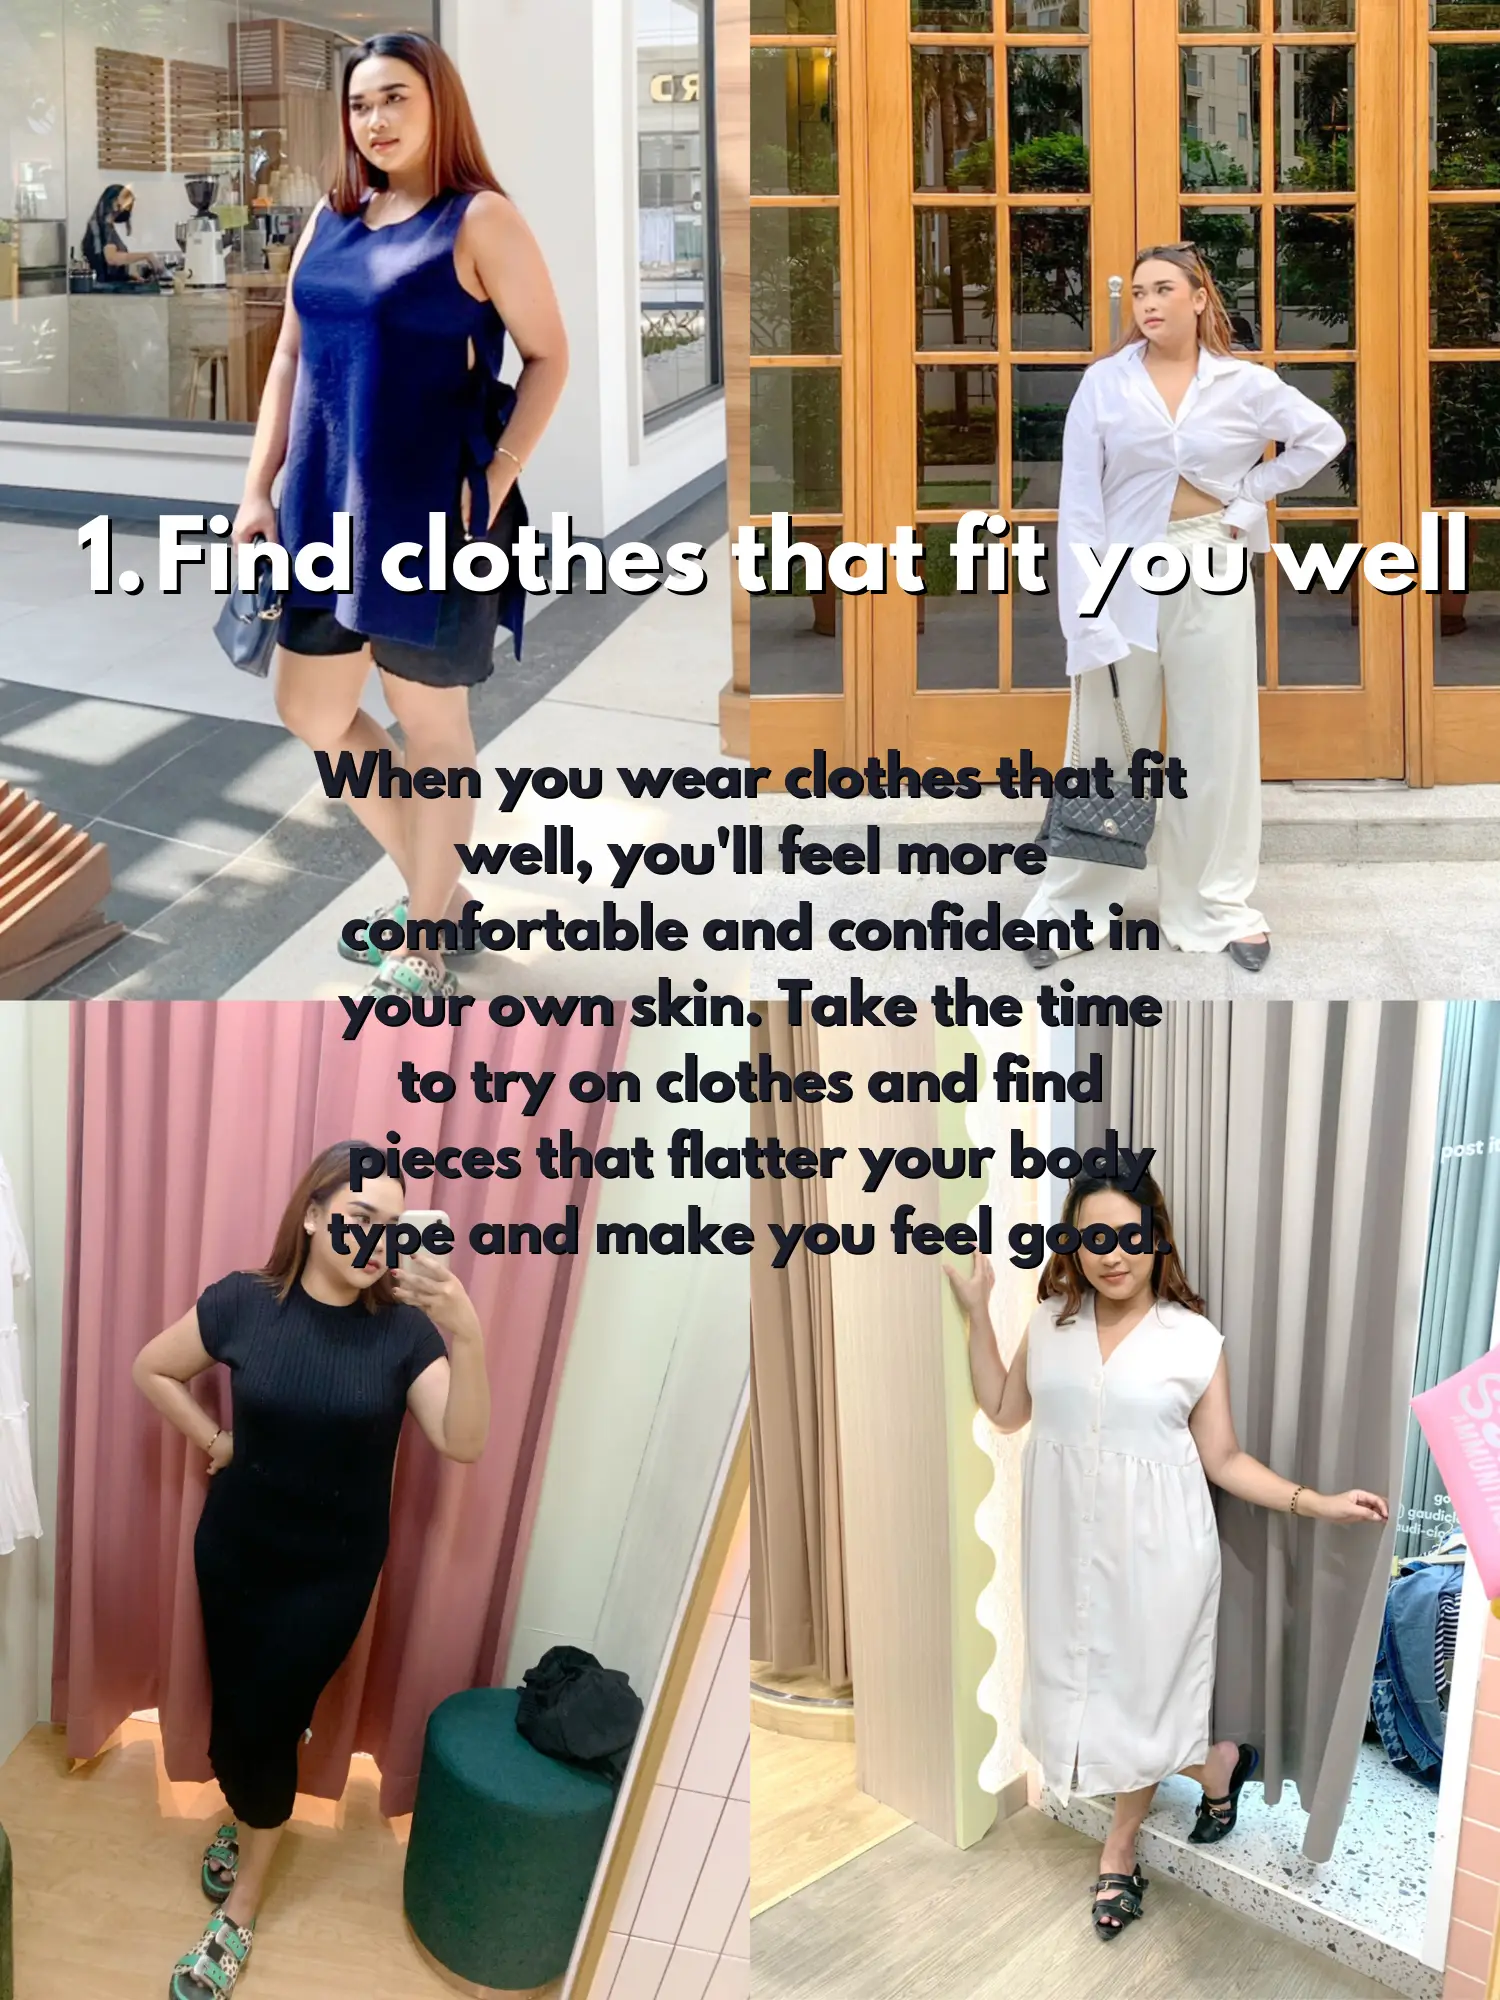 Dress Up To Boost Your Confidence, Galeri diposting oleh Amanda Nachila